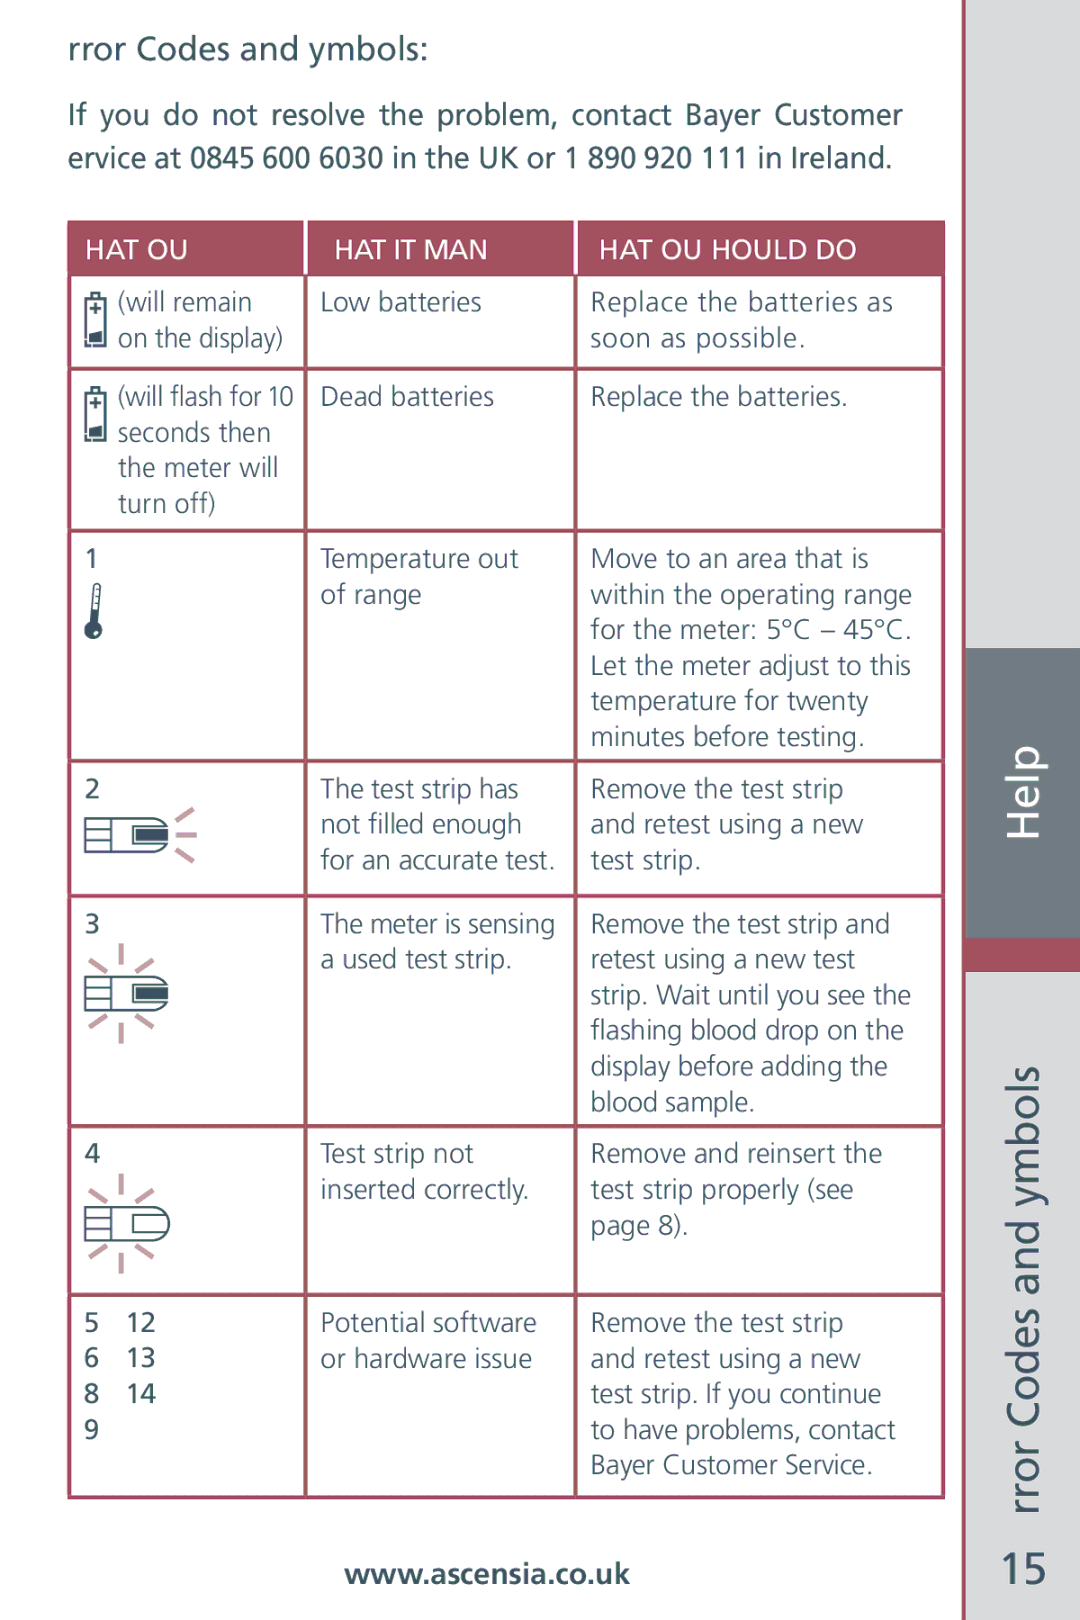 Bayer HealthCare Blood Glucose Meter manual Error Codes and Symbols 